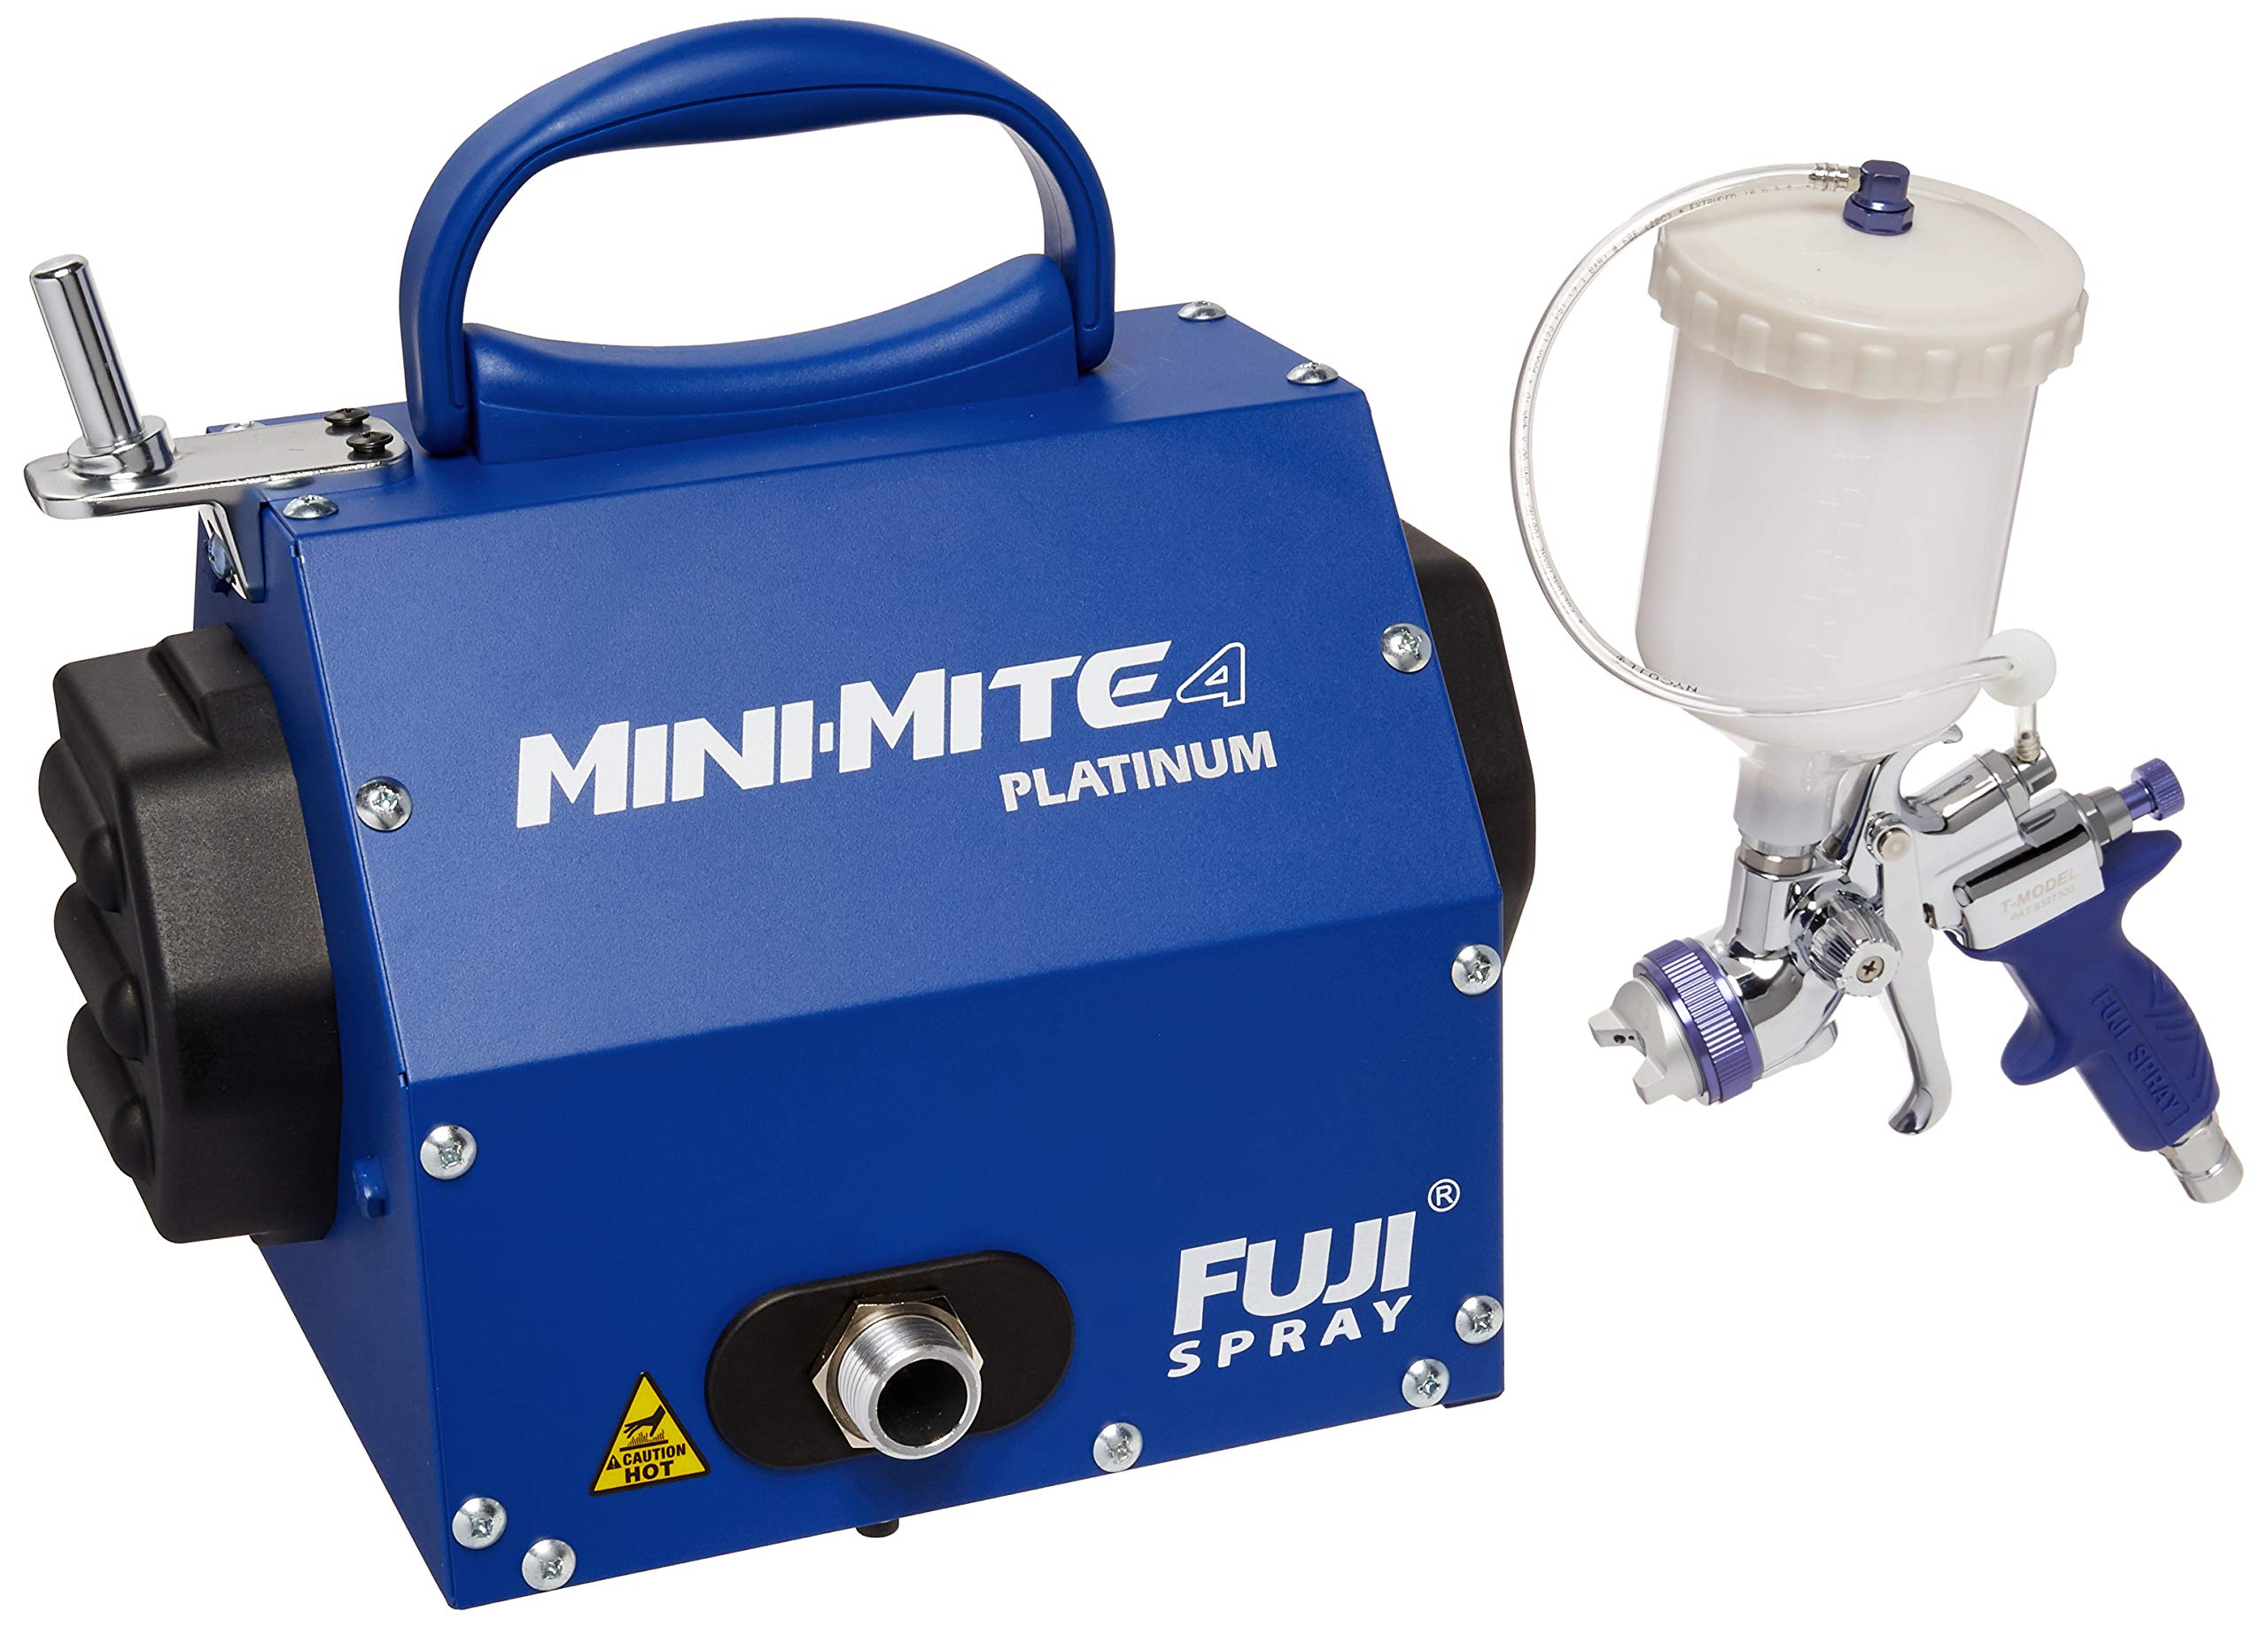 Fuji Spray 2804-T75G Mini-Mite 4 Platinum - T75G Gravity HVLP Spray System